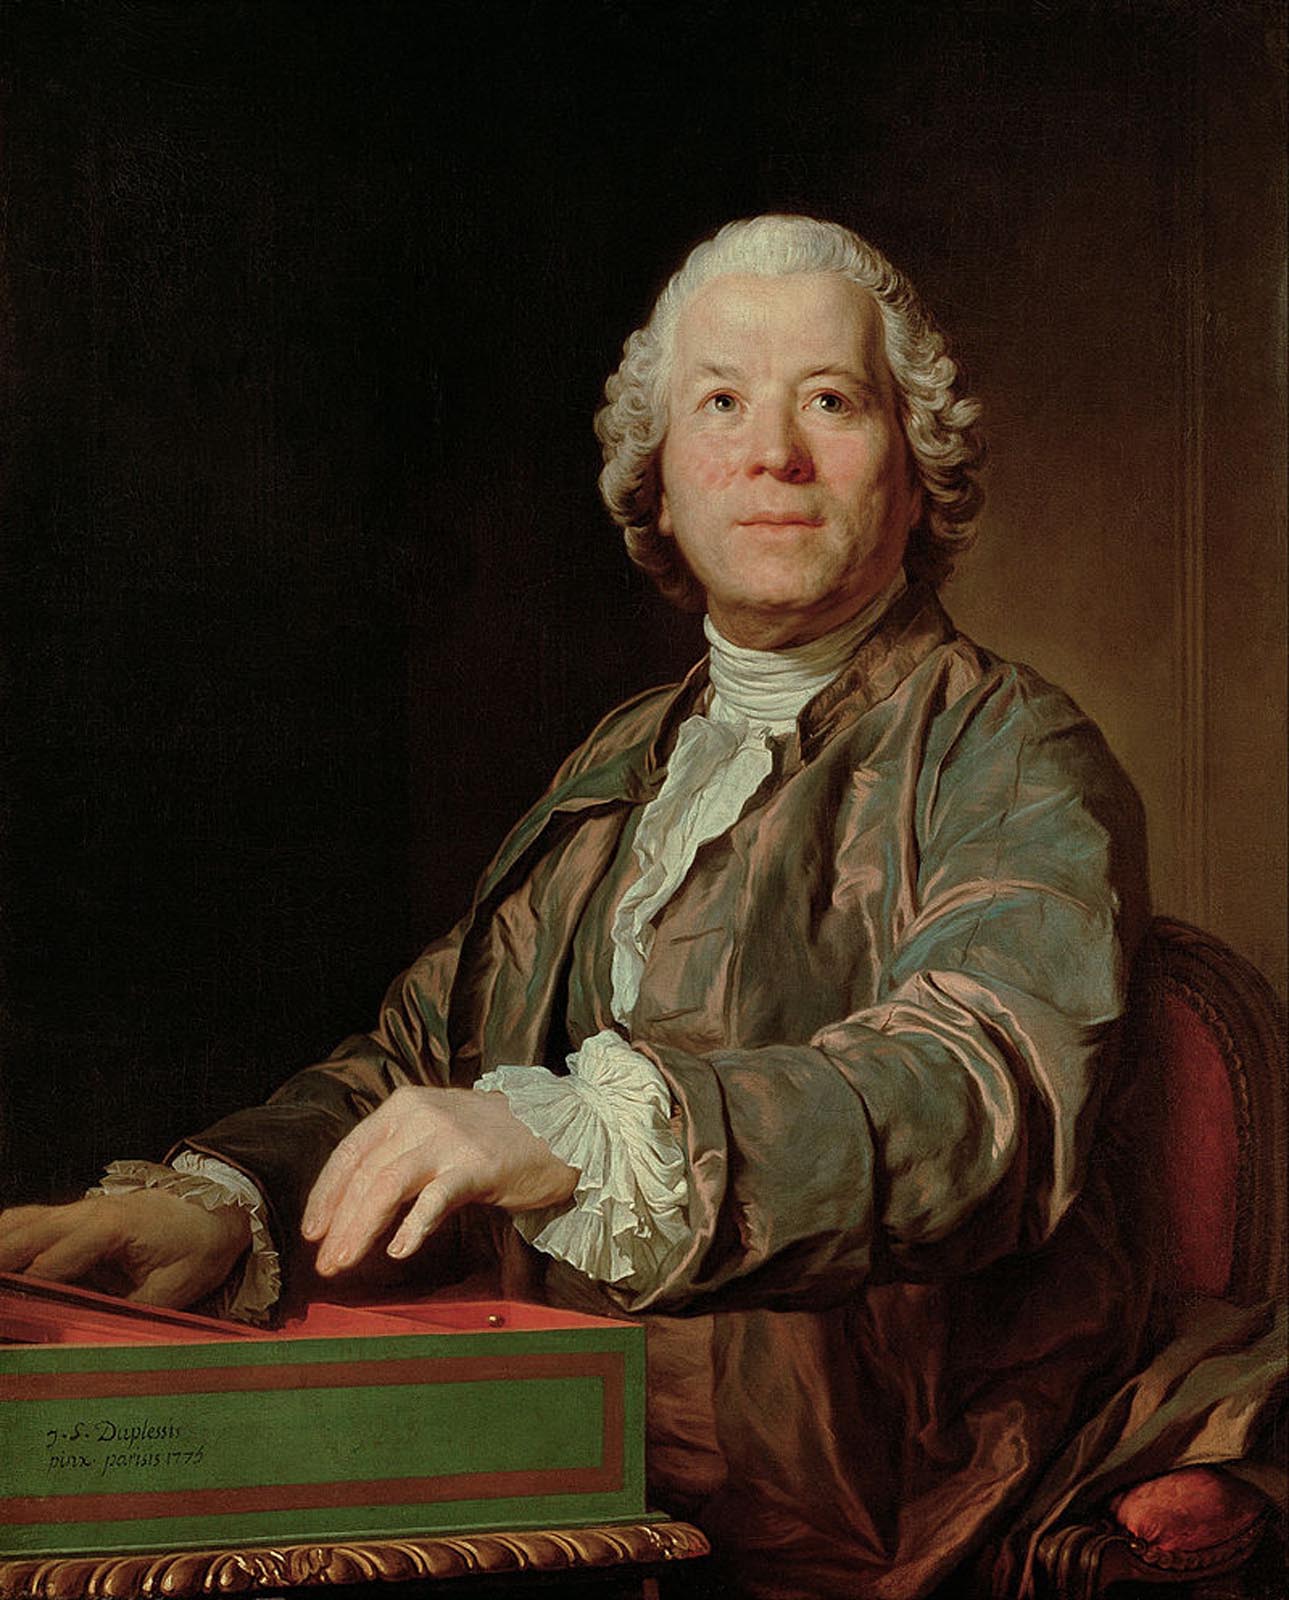 Portrait de Gluck, peinture de Duplessis.